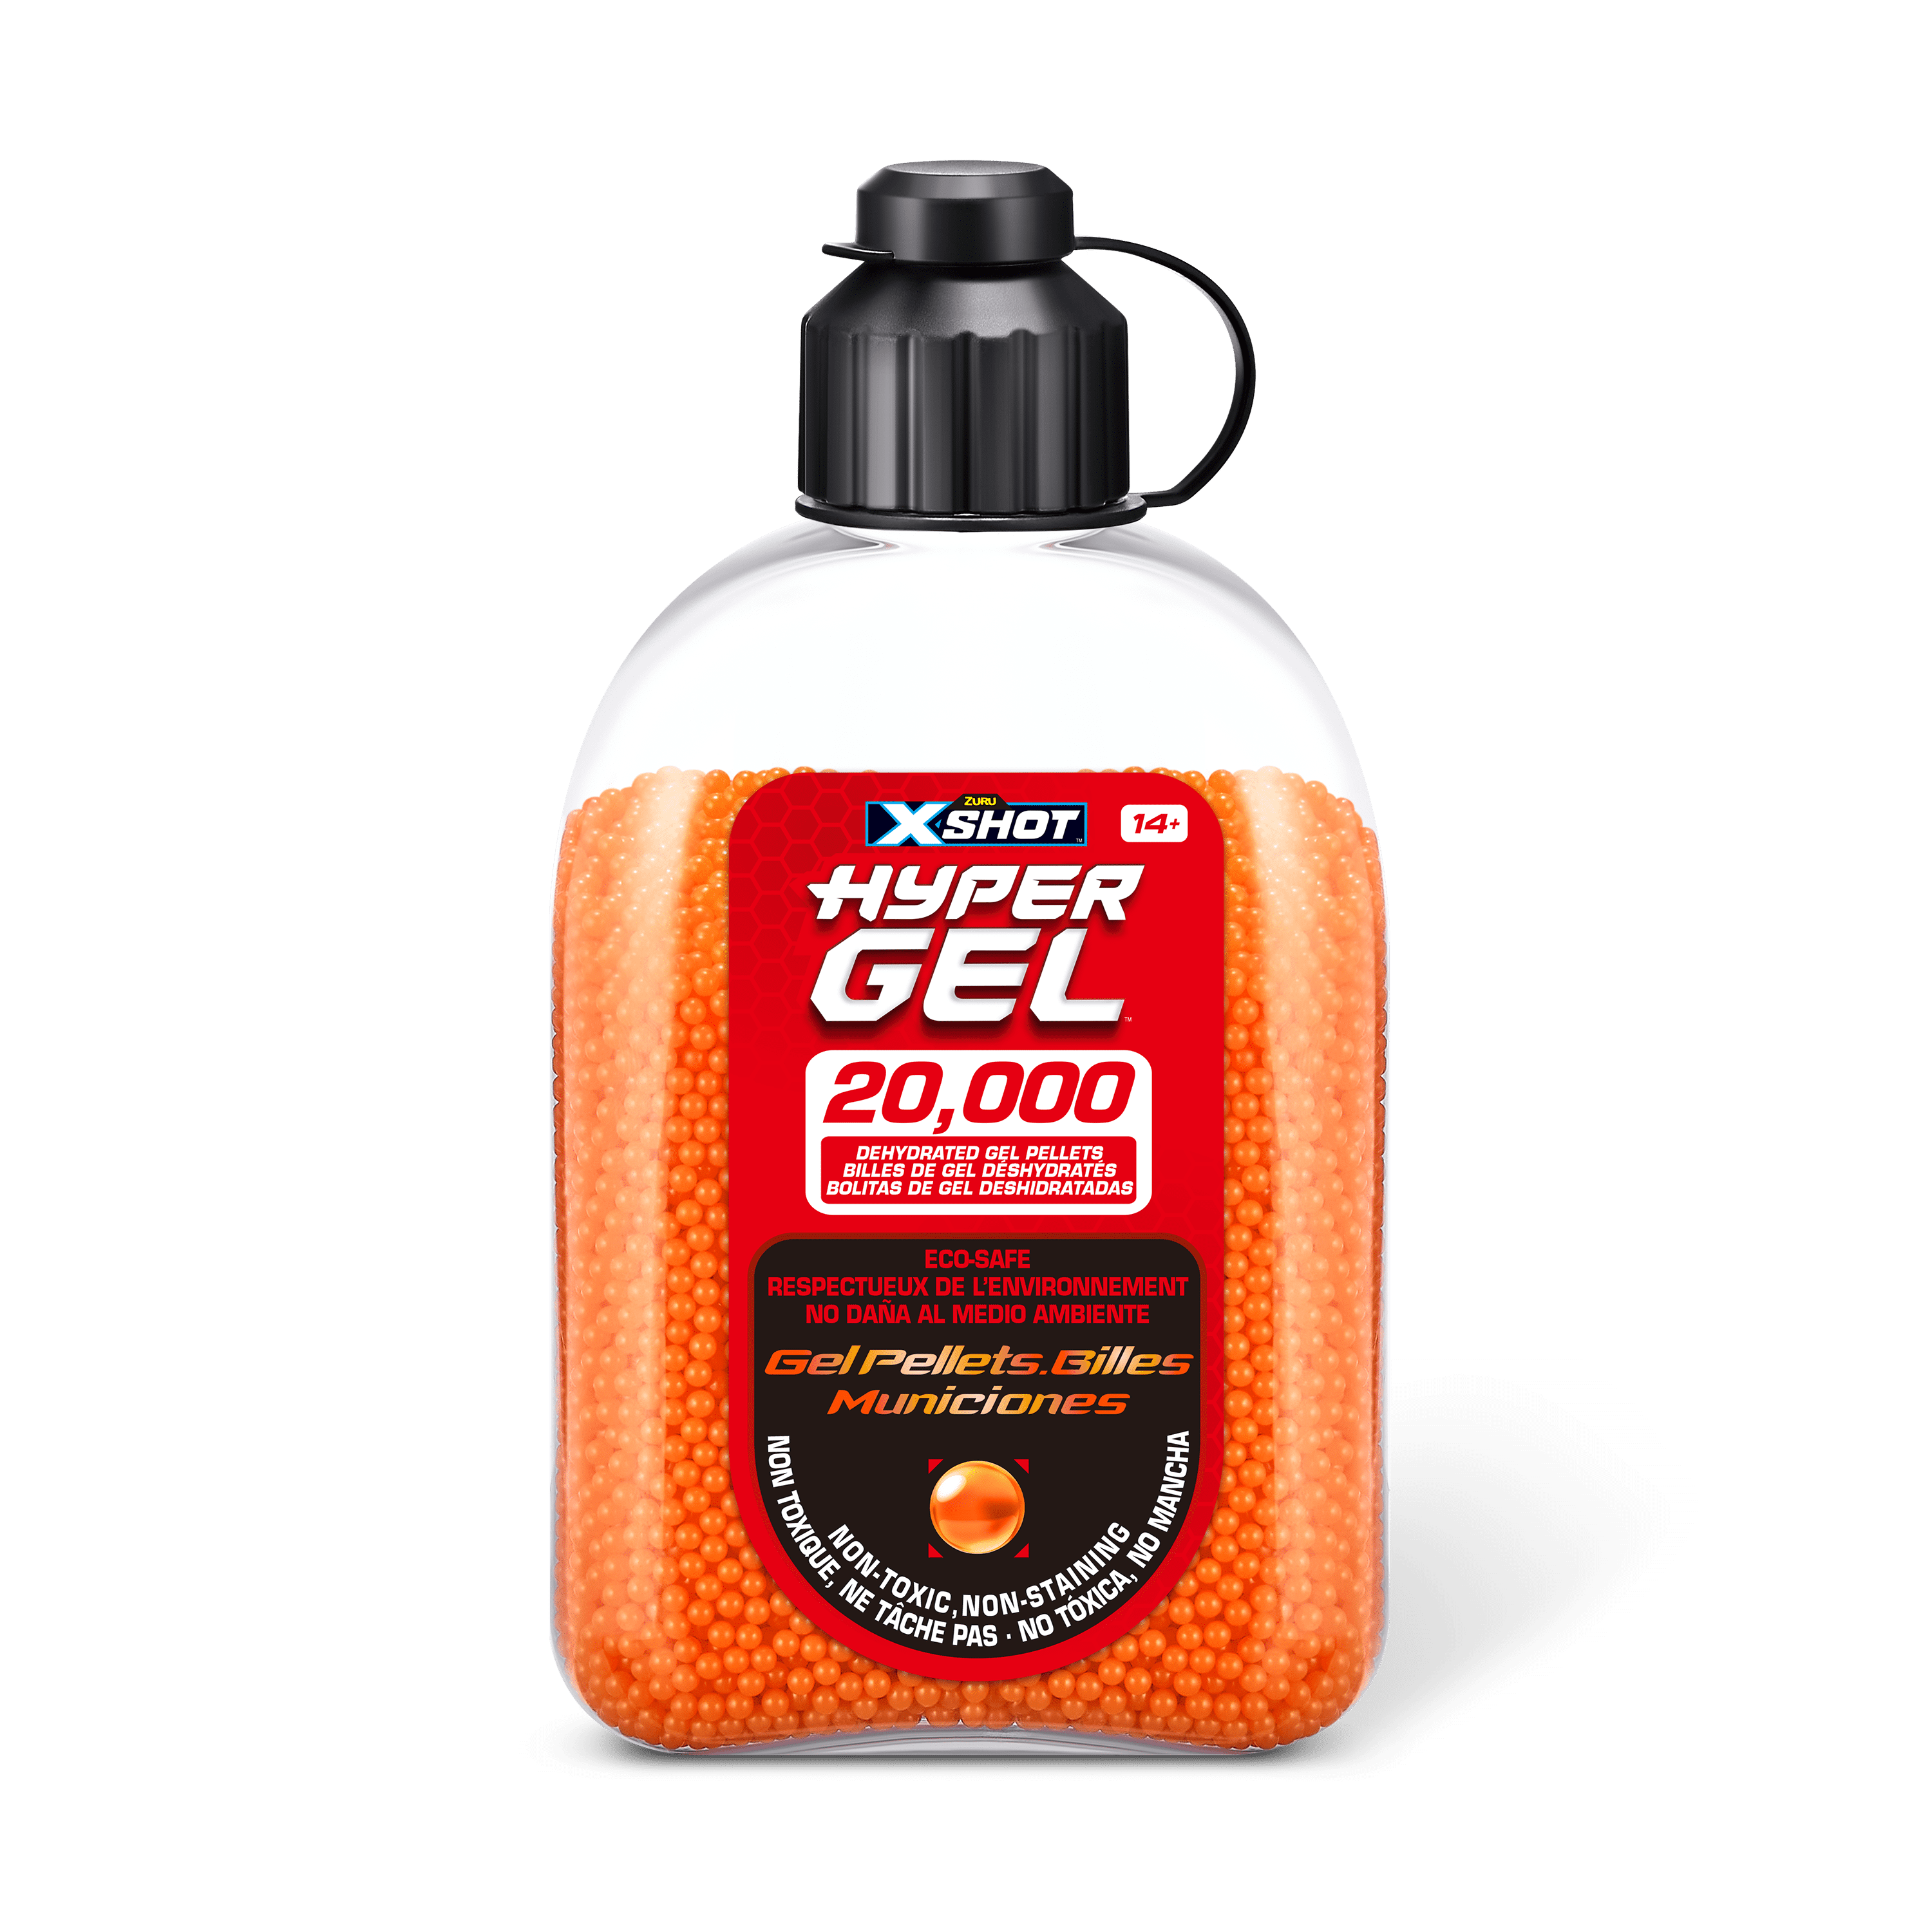 X-Shot Hyper Gel Pellet Refill Pack (20,000 Hyper Gel Pellets) for Ages 8-99